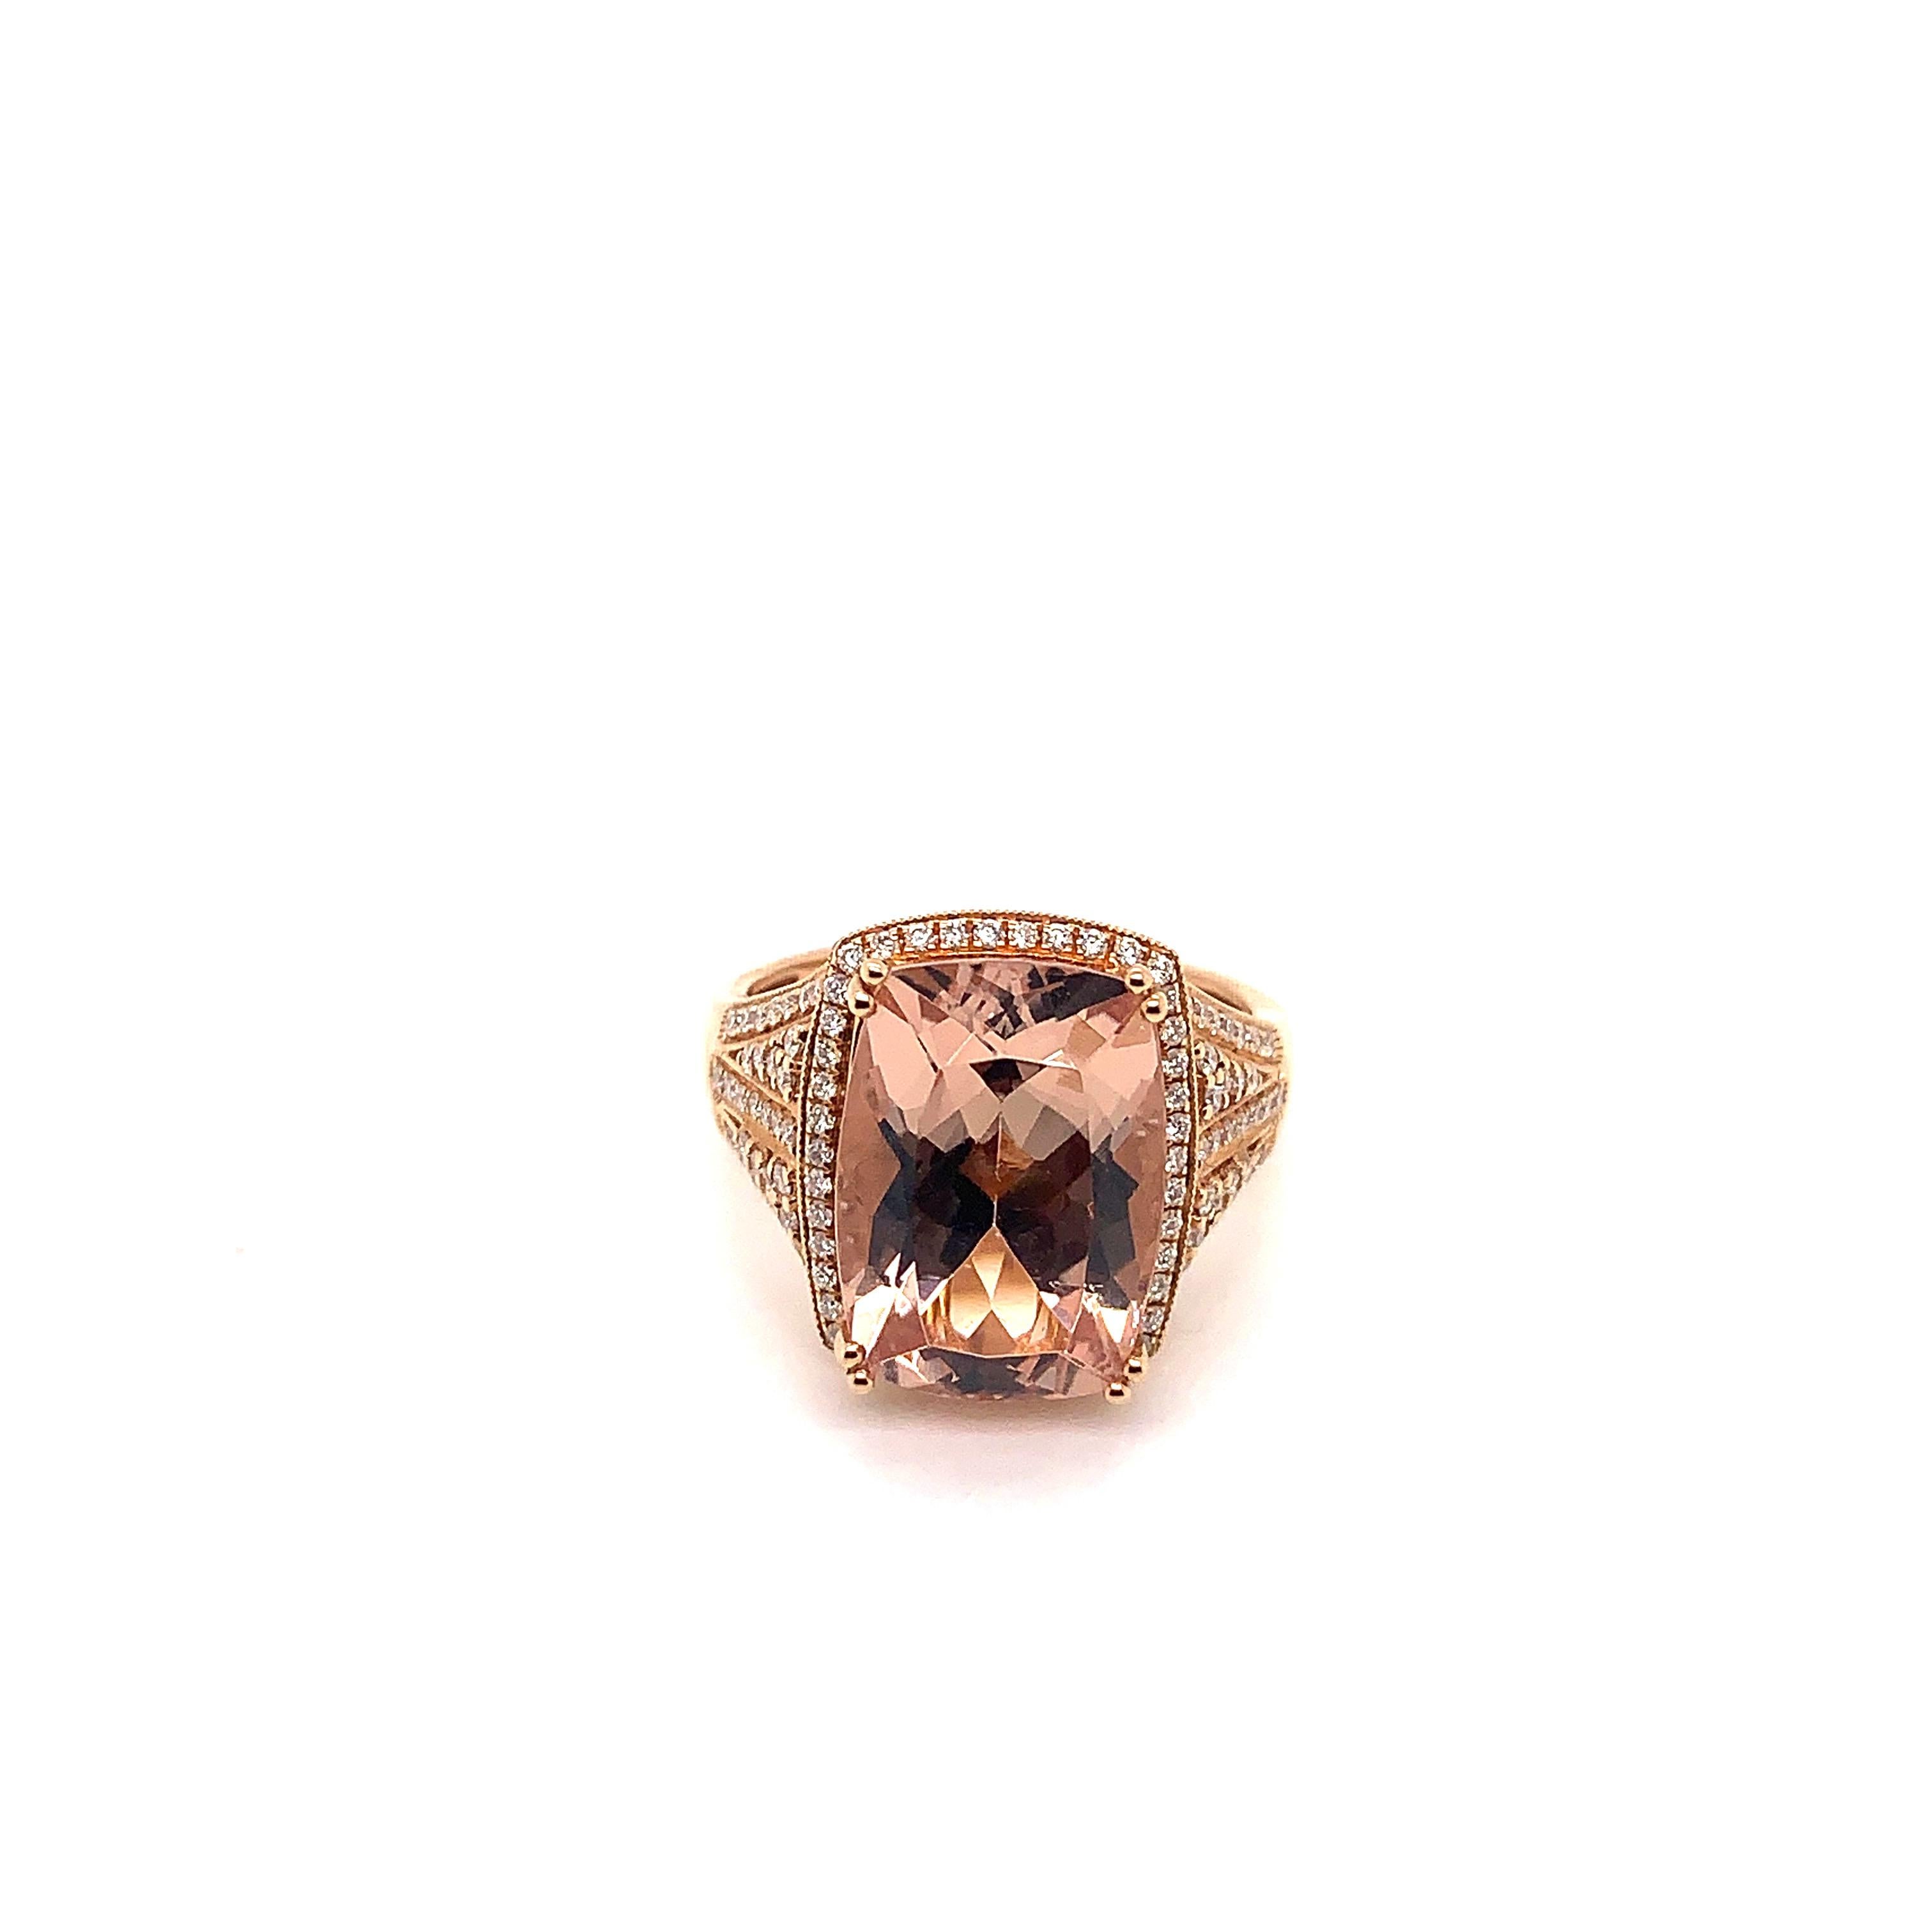 Bague classique en morganite en or rose 18 carats avec diamants. 

Morgane : 6,49 carats en forme de coussin.
Diamants : 0.3702 carat, couleur G, pureté VS. 
Or : 4,988 g, or rose 18 carats. 